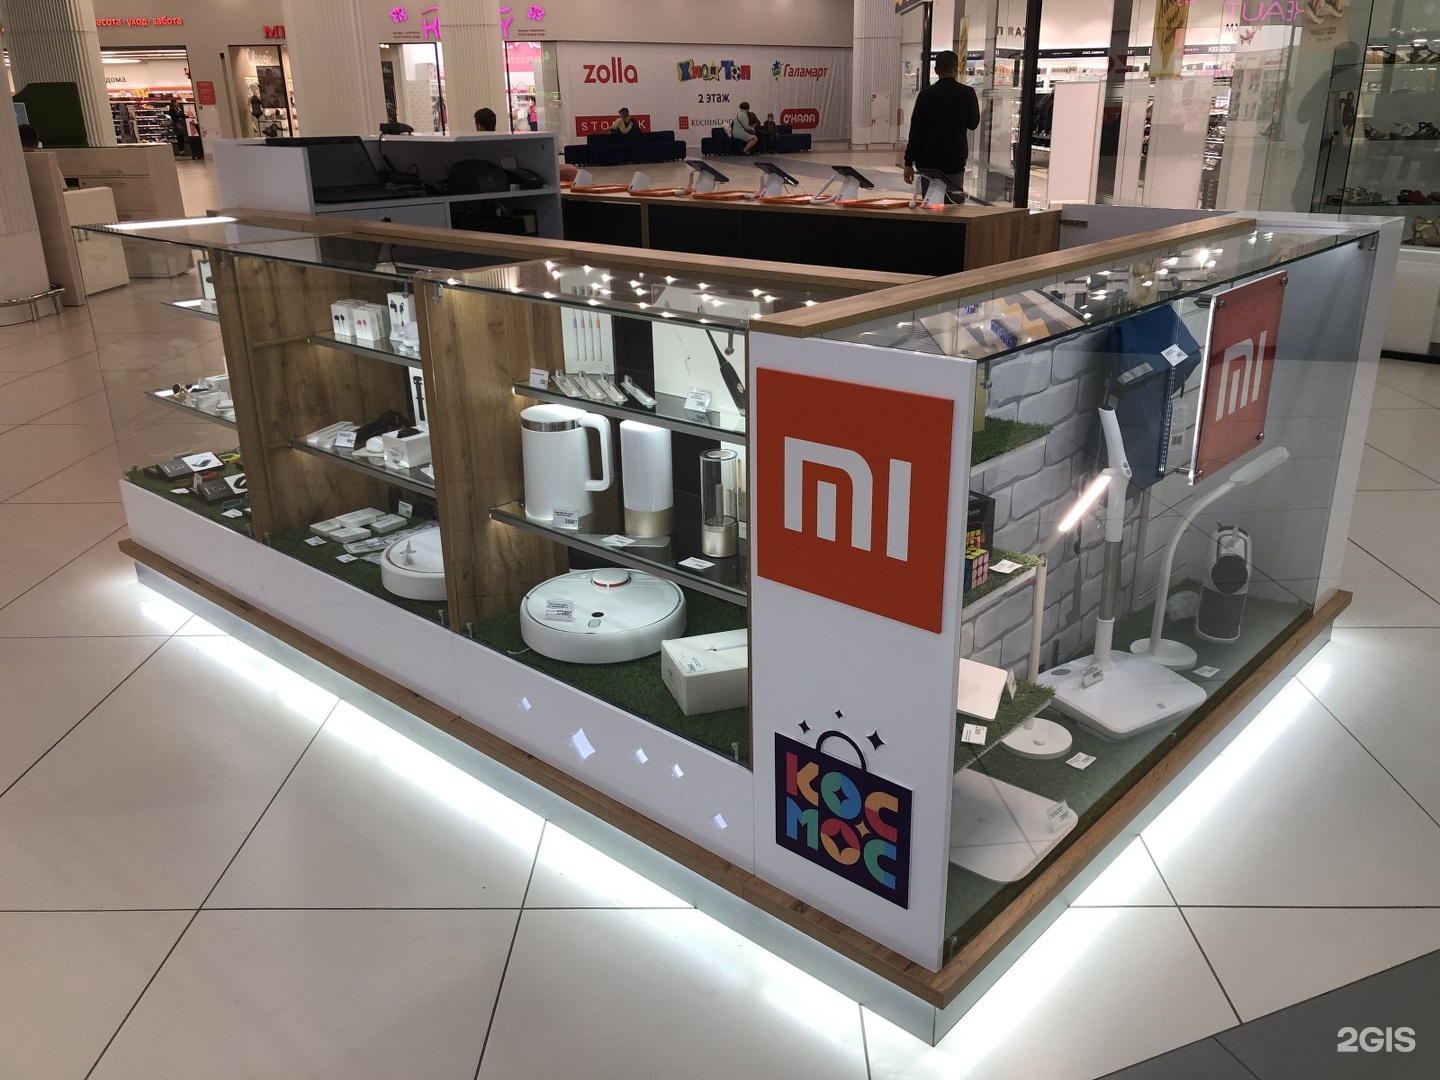 Магазин Xiaomi В Якутске